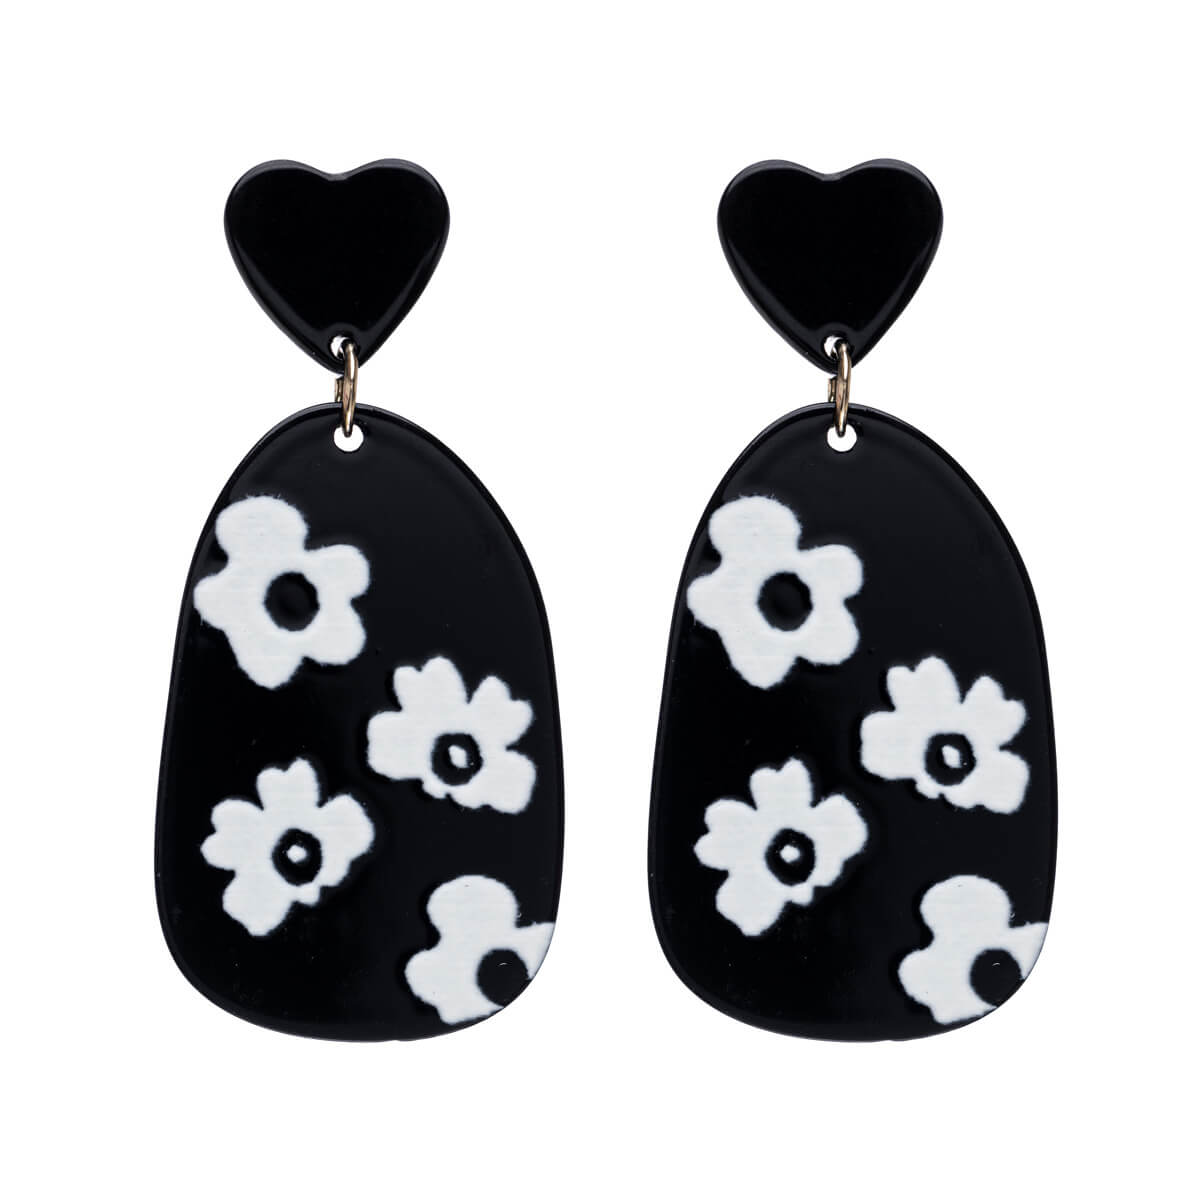 Plastic flower -patterned earrings